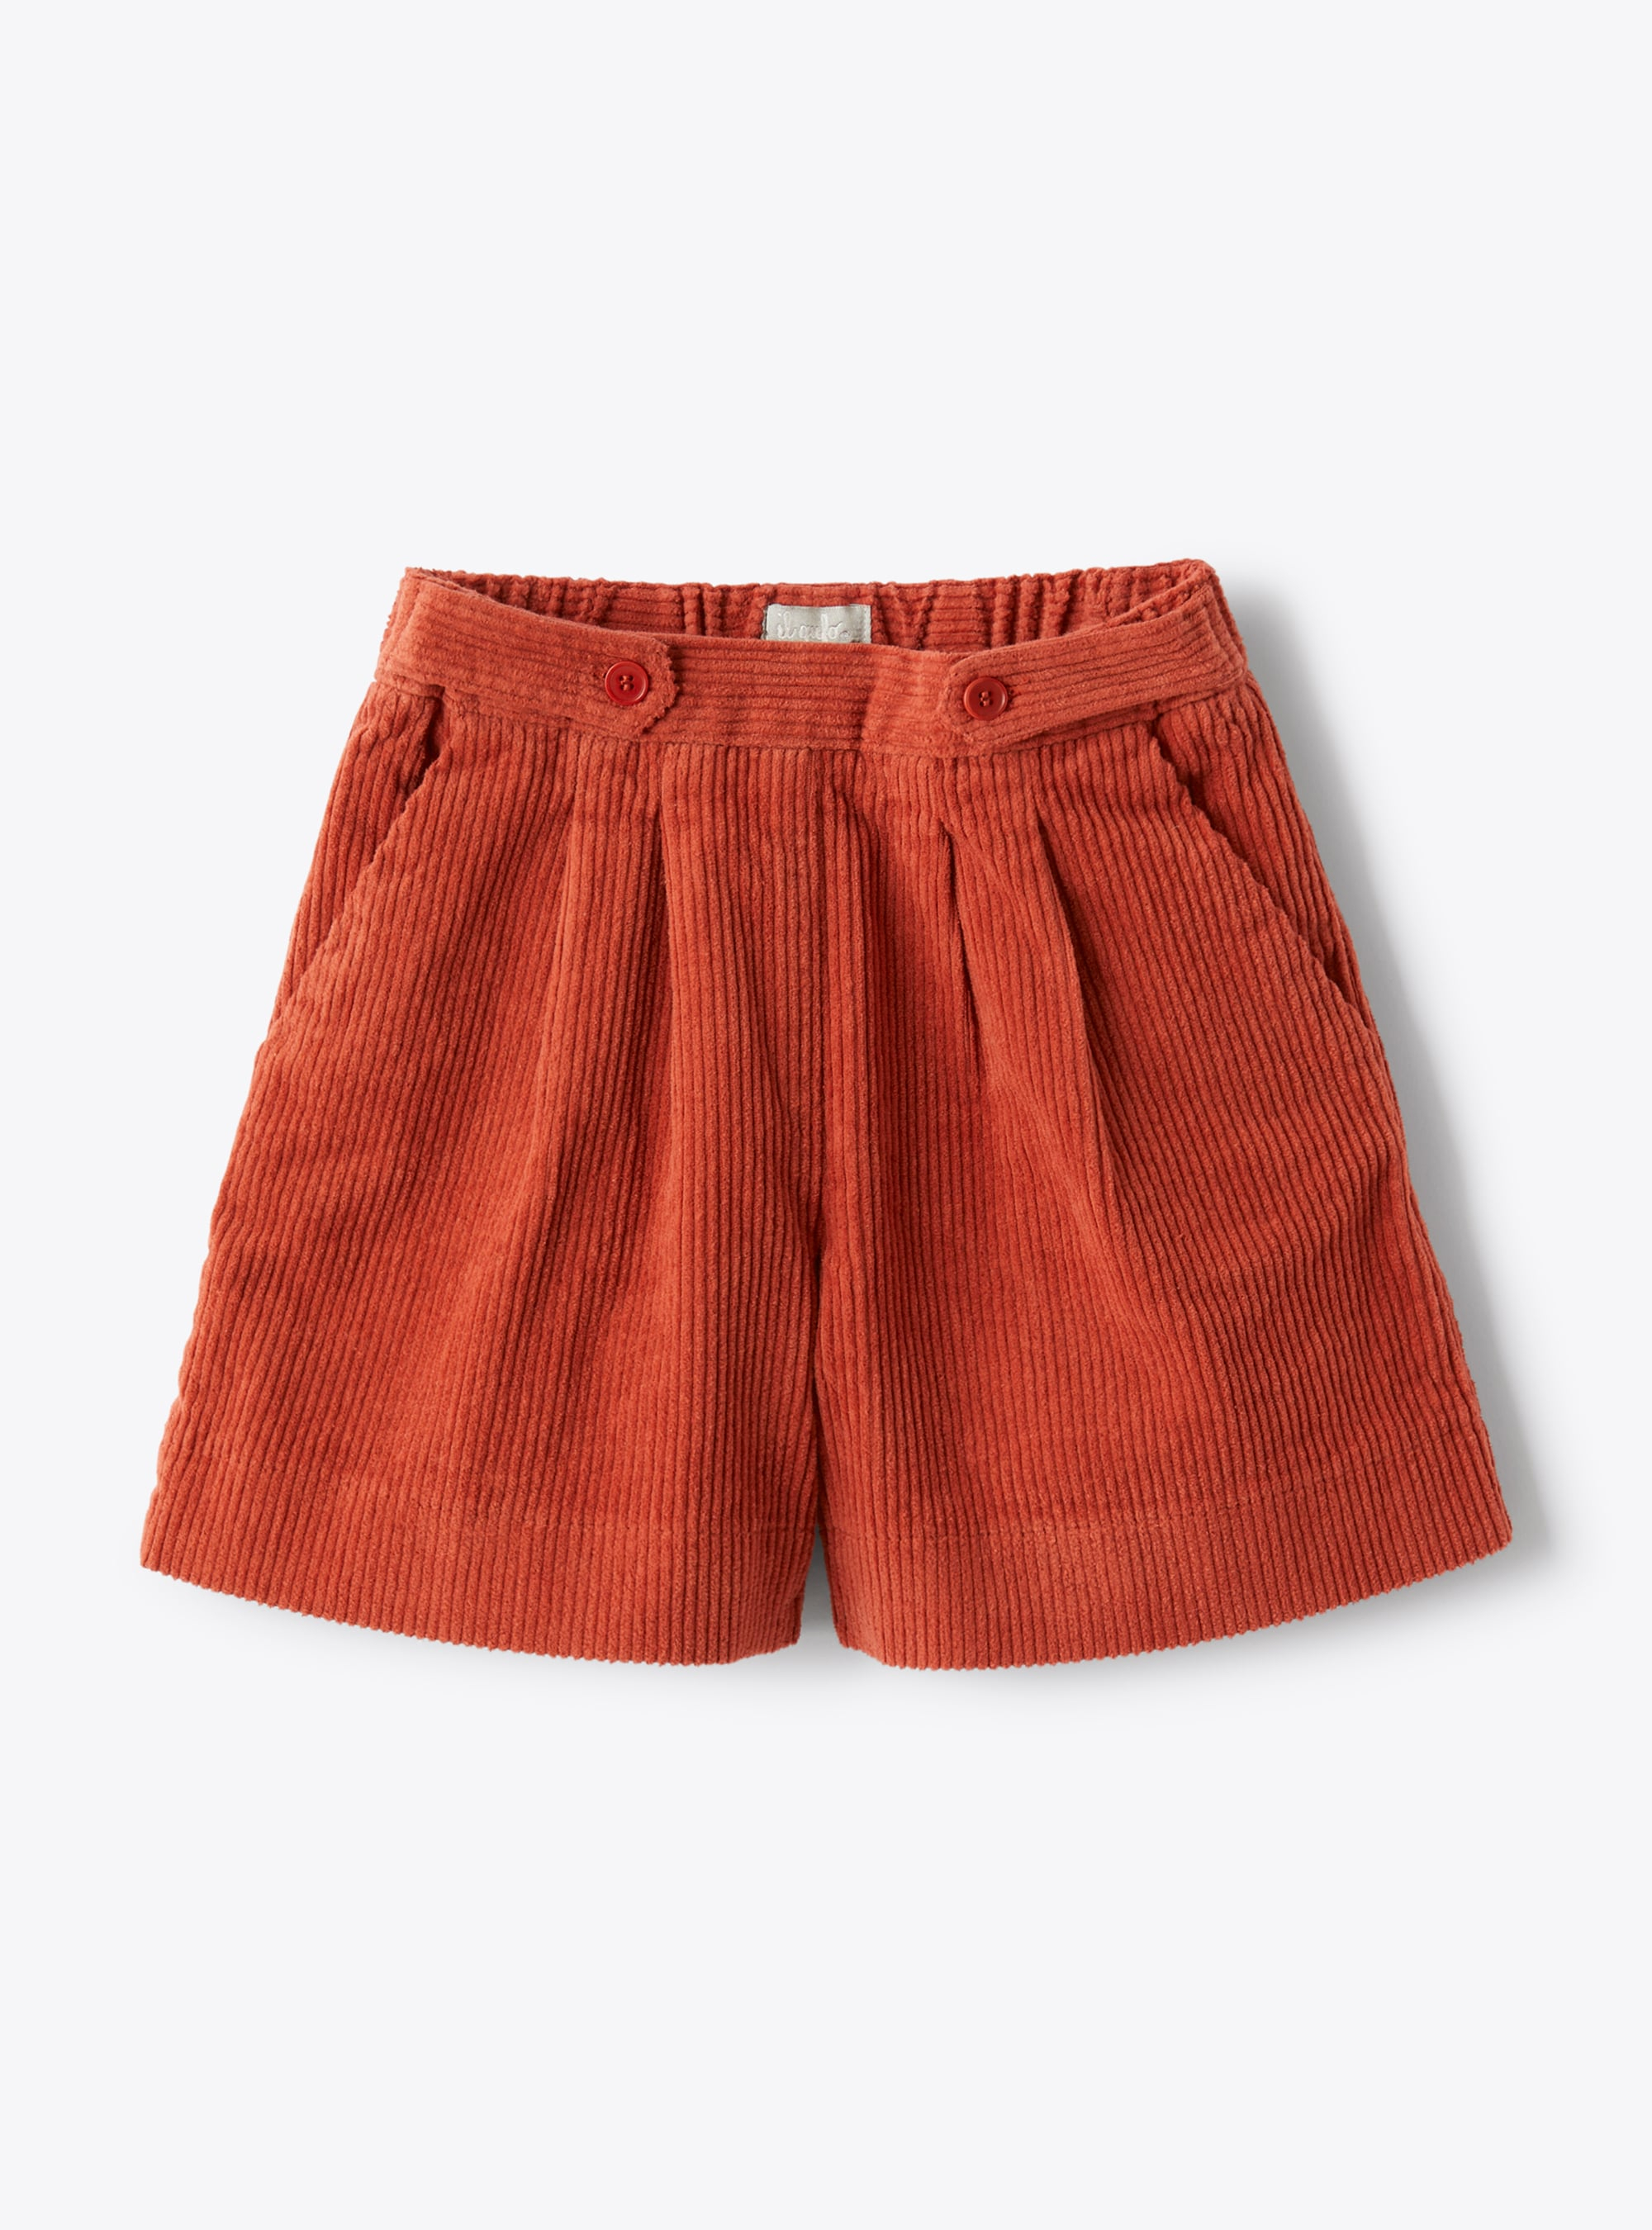 Bermuda shorts in brick-red corduroy - Trousers - Il Gufo